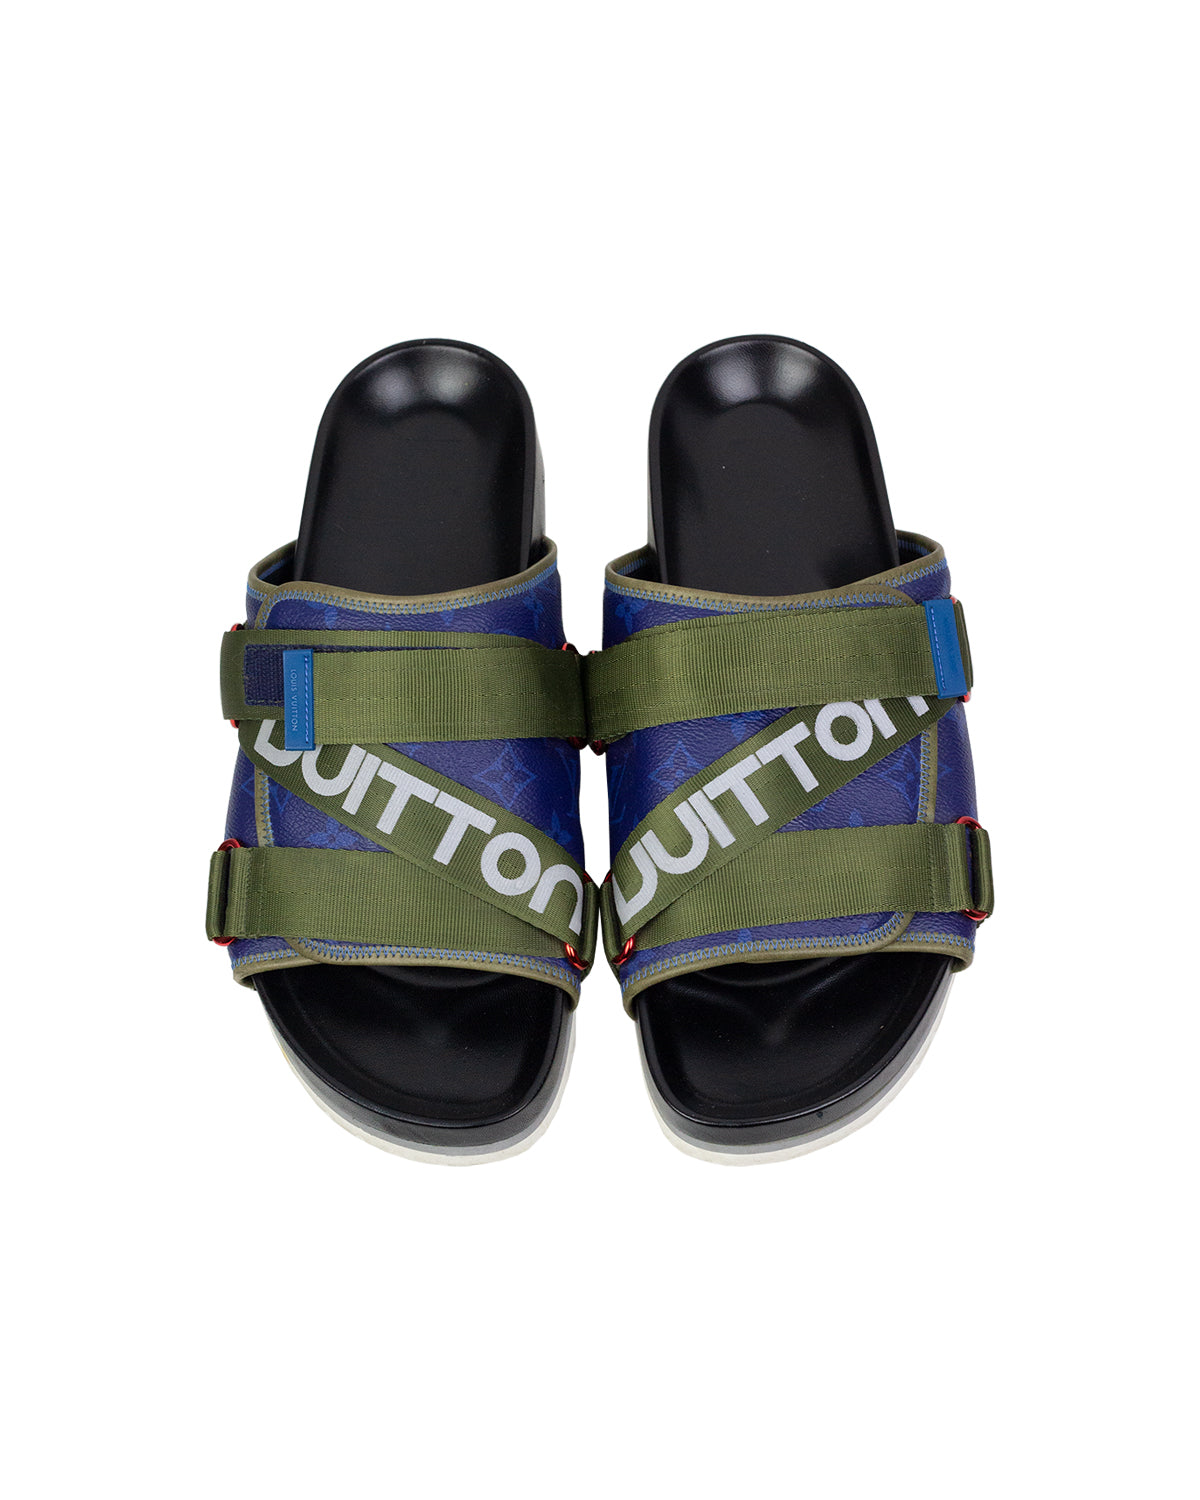 Shop Louis Vuitton Sandals by lifeisfun